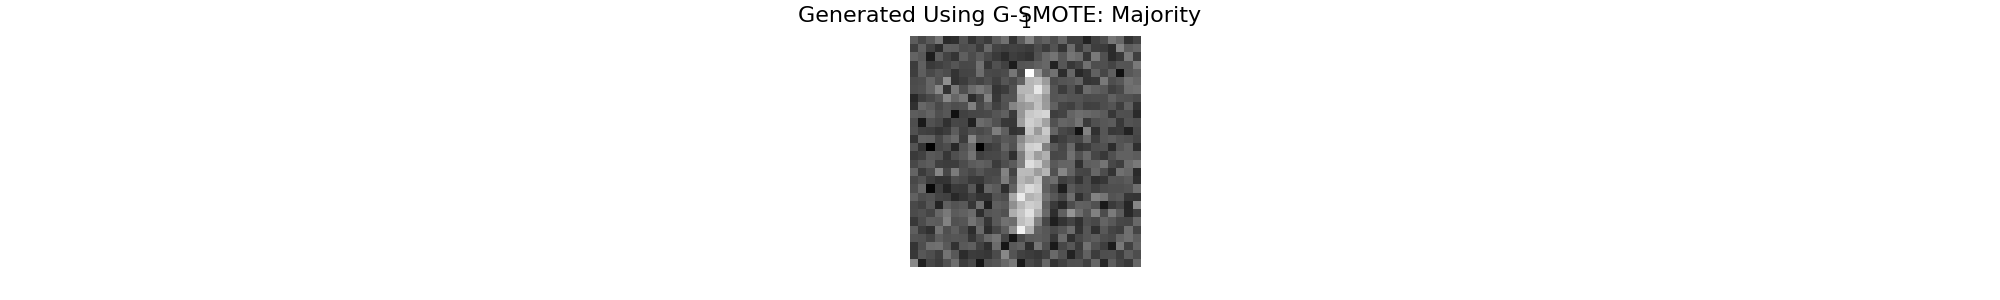 Generated Using G-SMOTE: Majority, 1